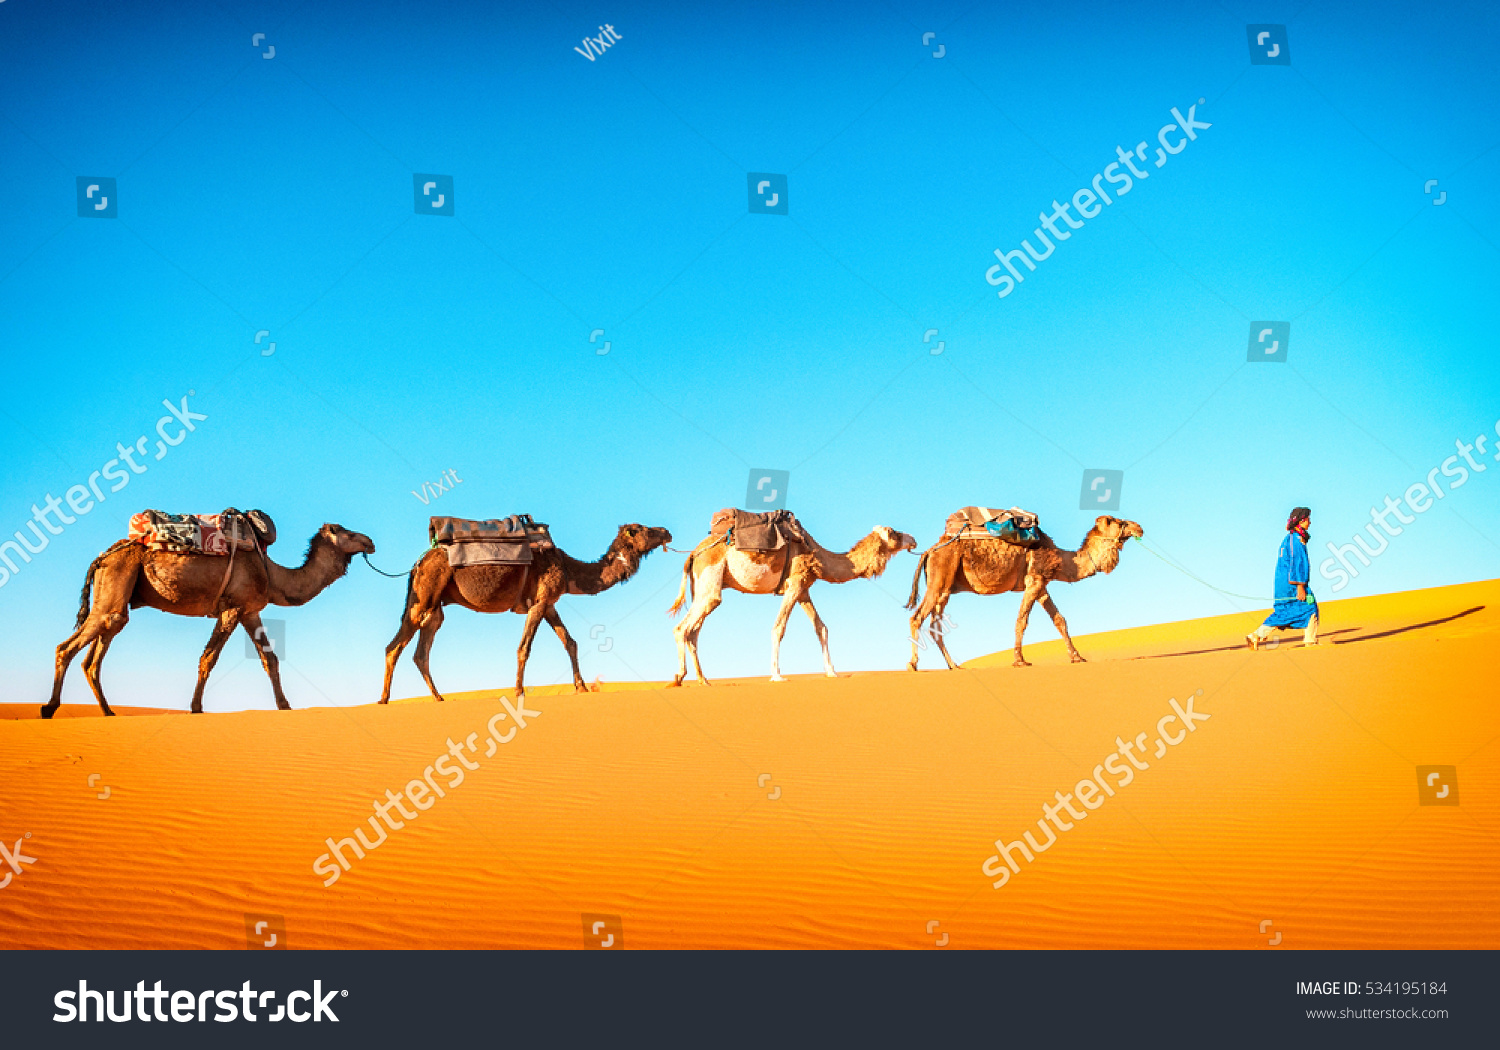 Camel caravan going through the sand dunes in the Sahara desert, Marocco. Camel in desert concept. #534195184